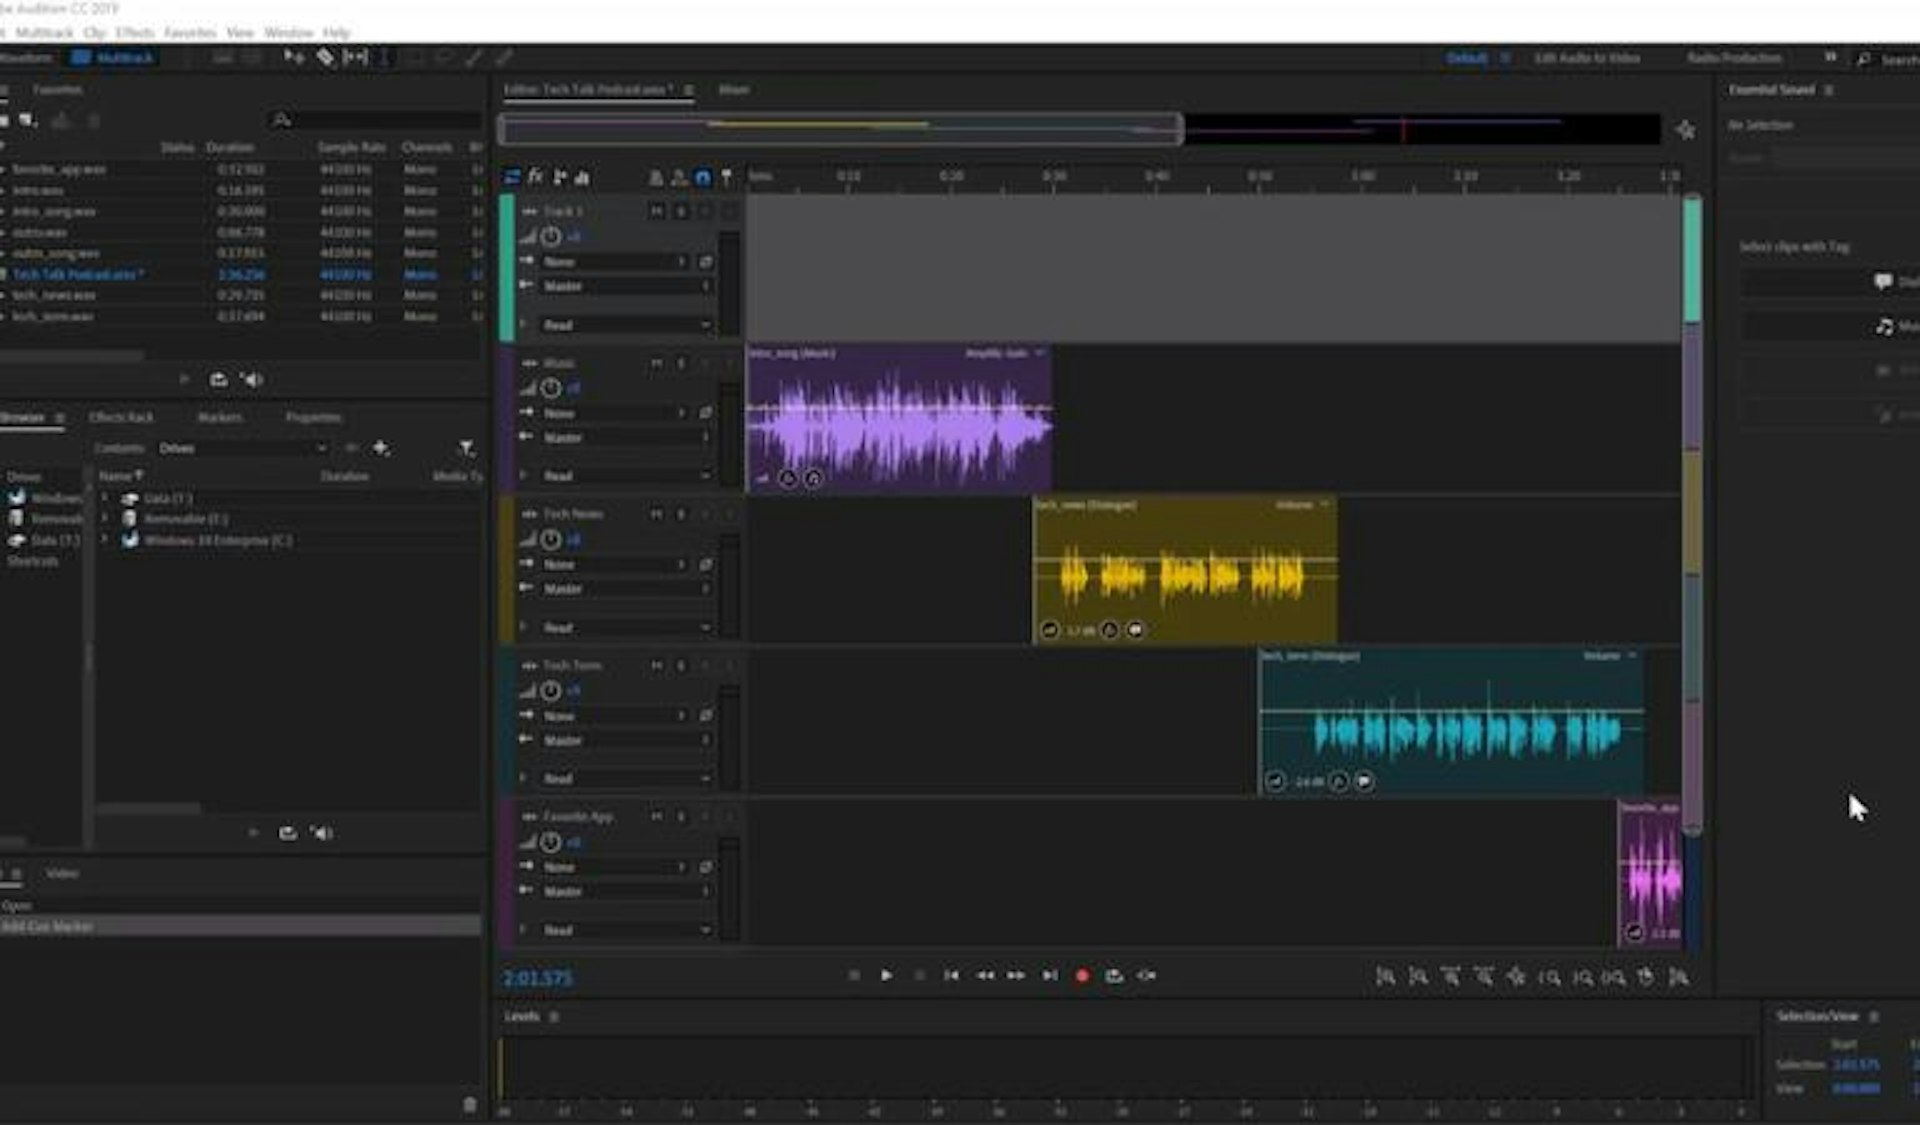 The Adobe Audition DAW view displays audio tracks.